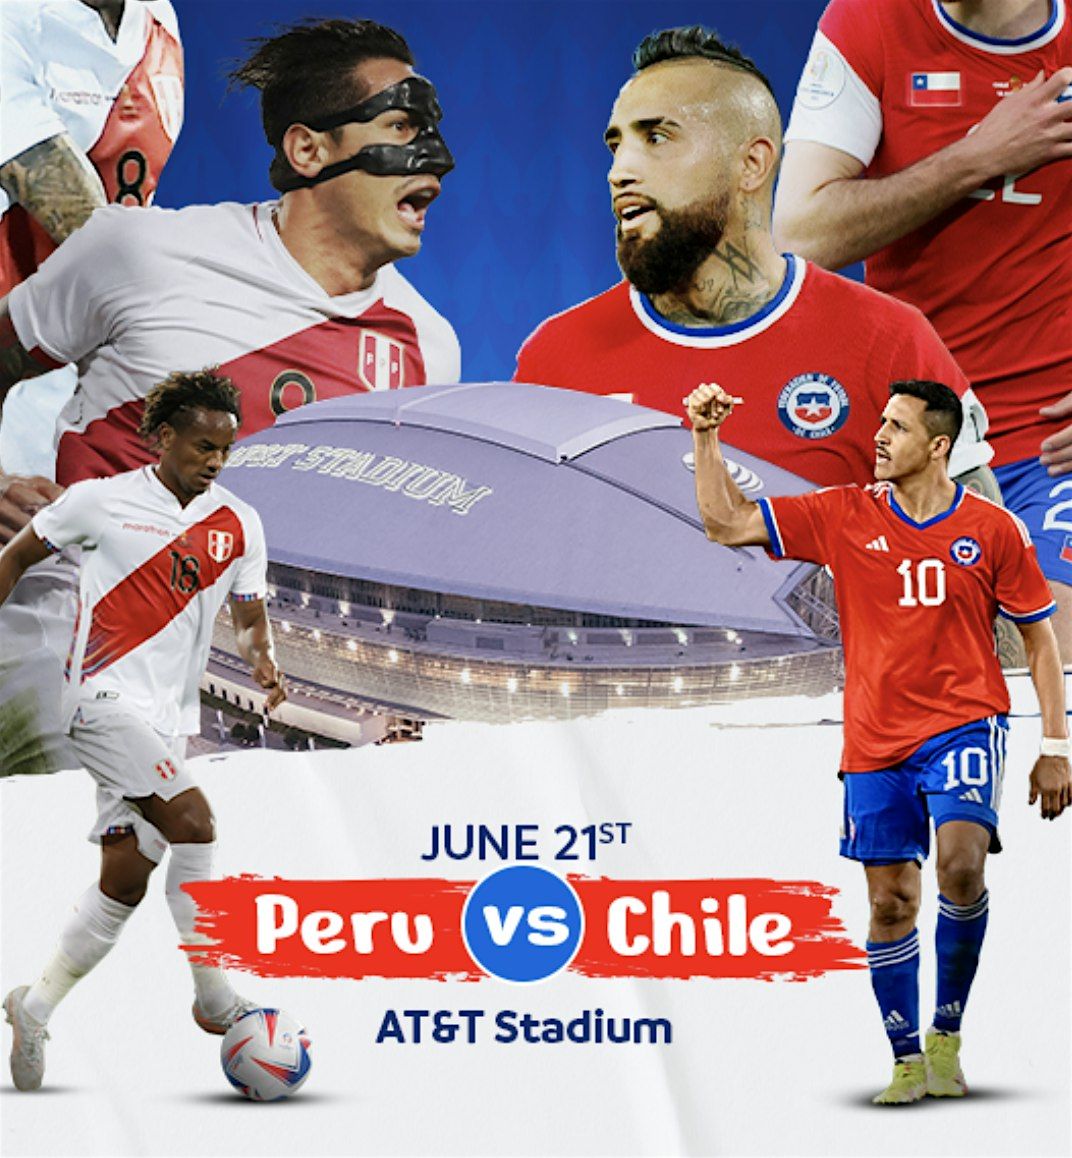 Peru vs Chile - Copa Am\u00e9rica - Matchday 1 of 3 #ViennaVA #WatchParty